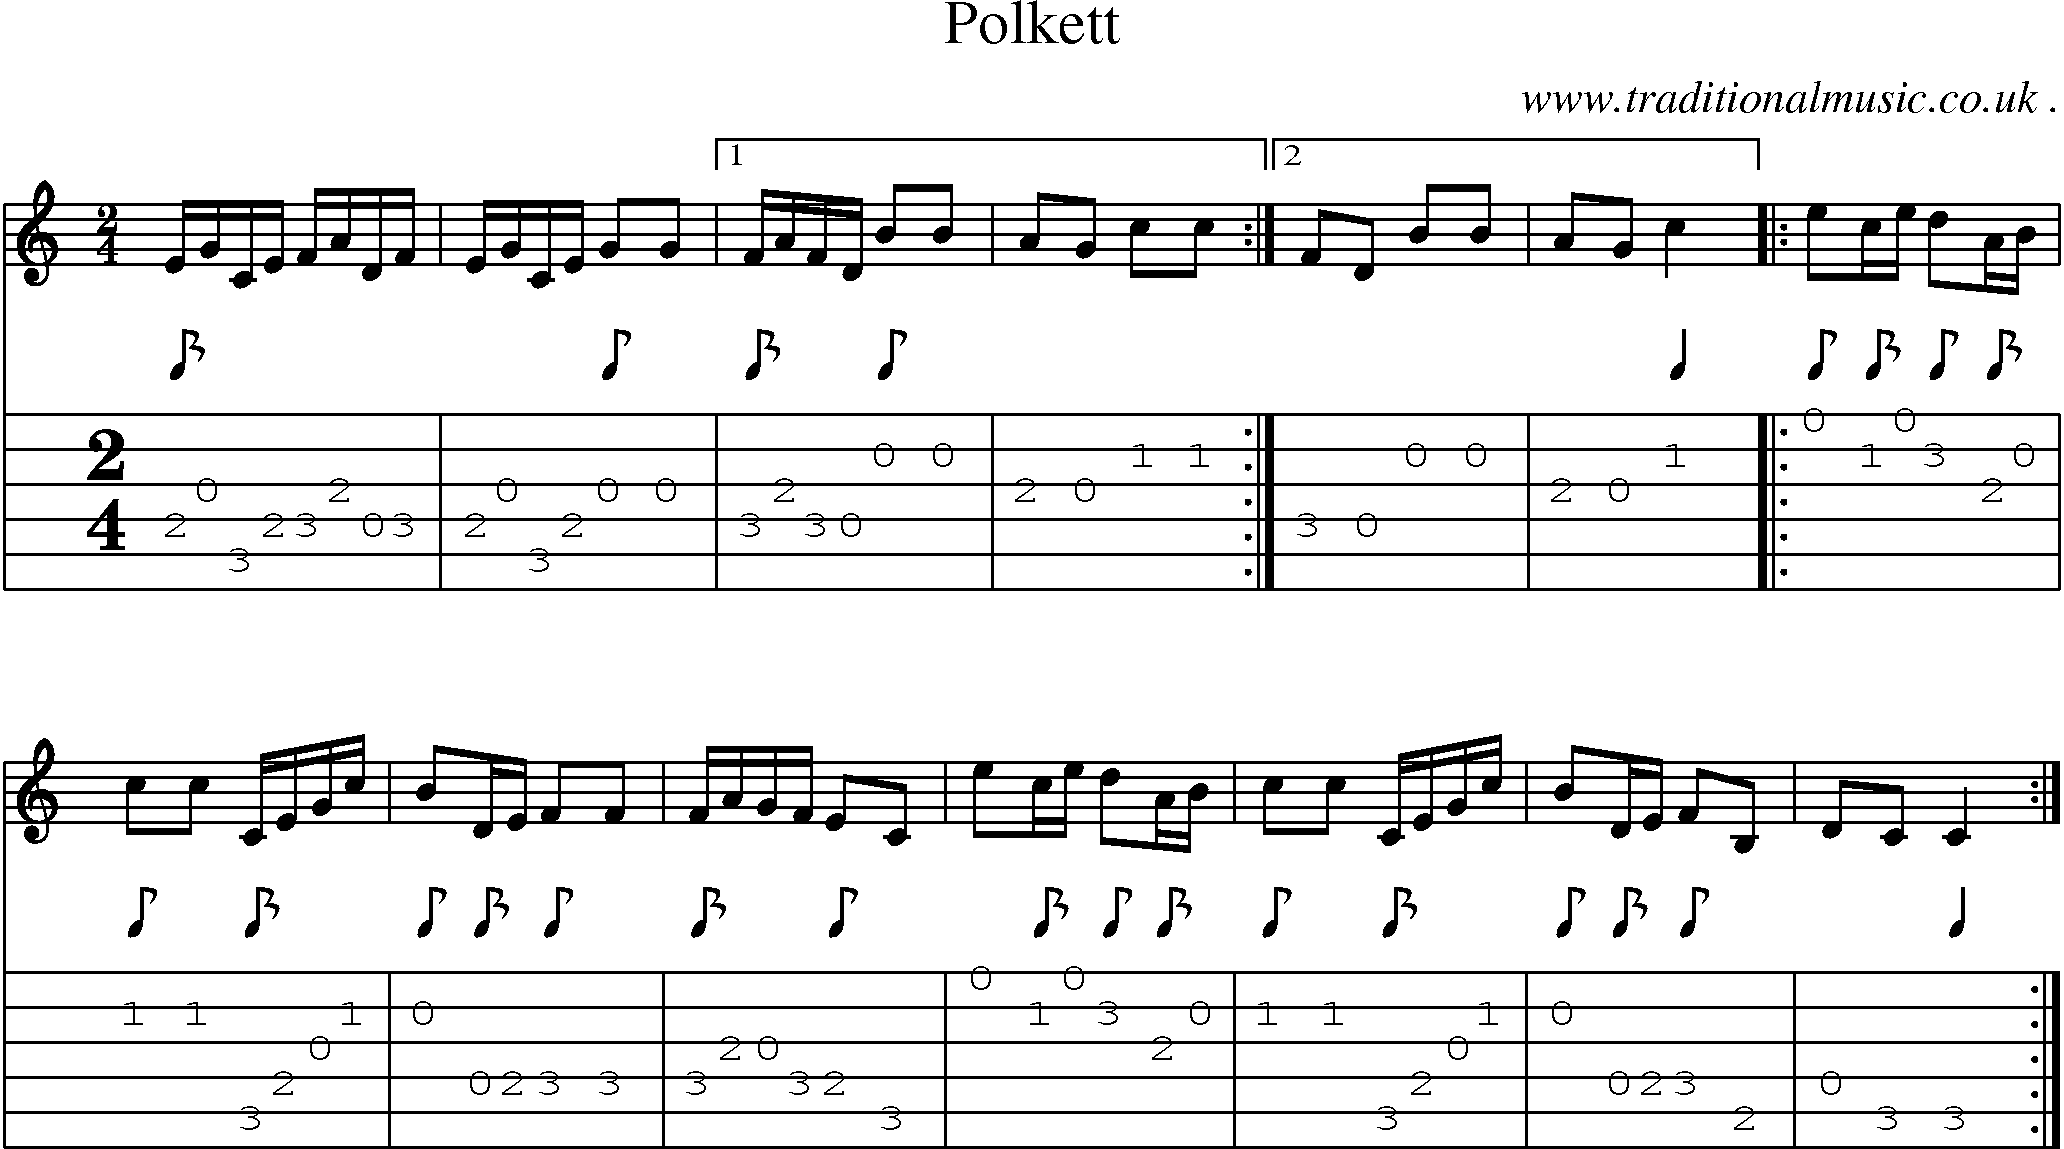 Sheet-Music and Guitar Tabs for Polkett